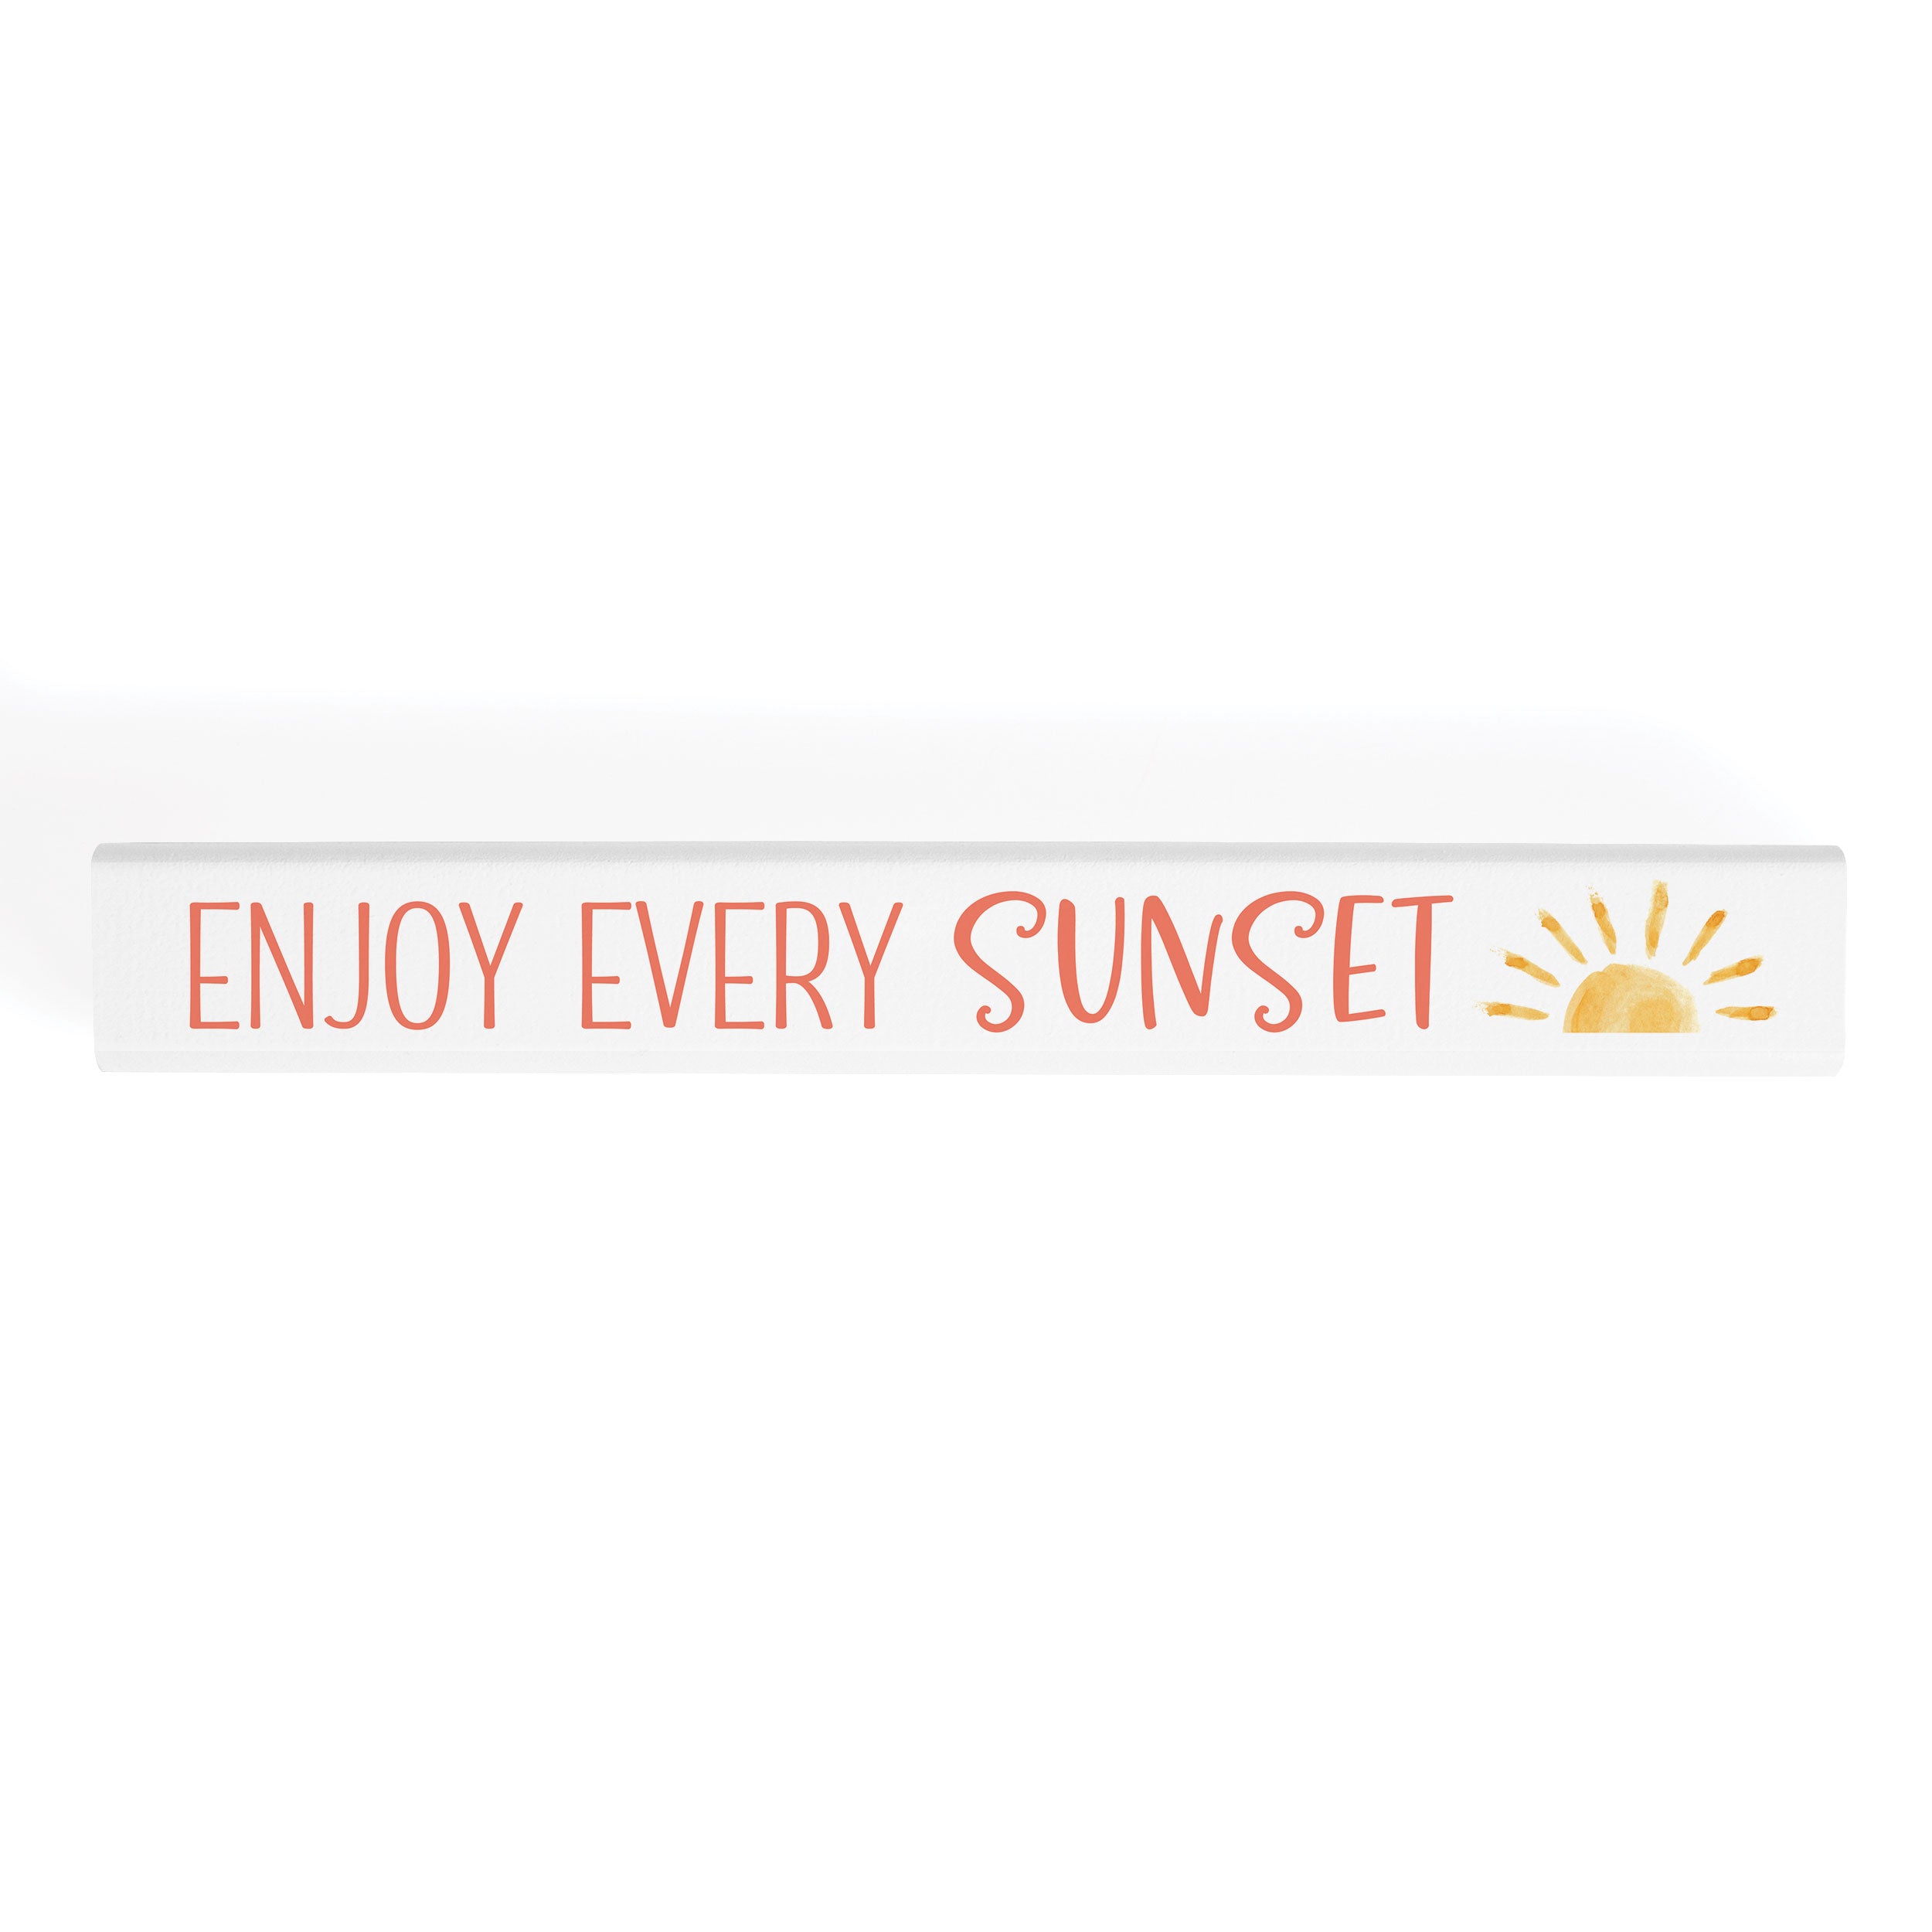 Enjoy Every Sunset Stick Sign